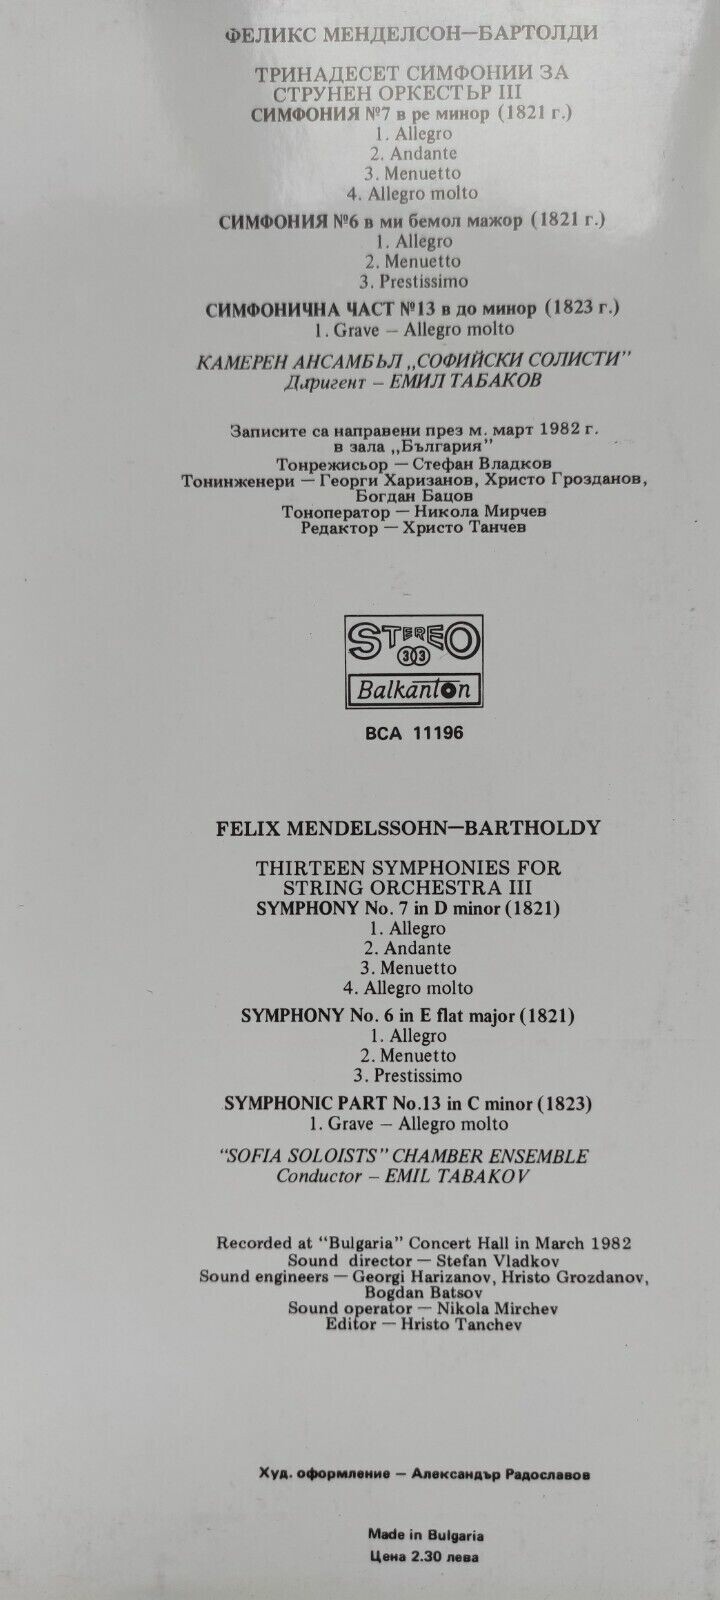 Феликс Менделсон-Бартолди. 13 симфонии за струнен оркестър. Изп. камерен ансамбъл "Софийски солисти", дир. Емил Табаков